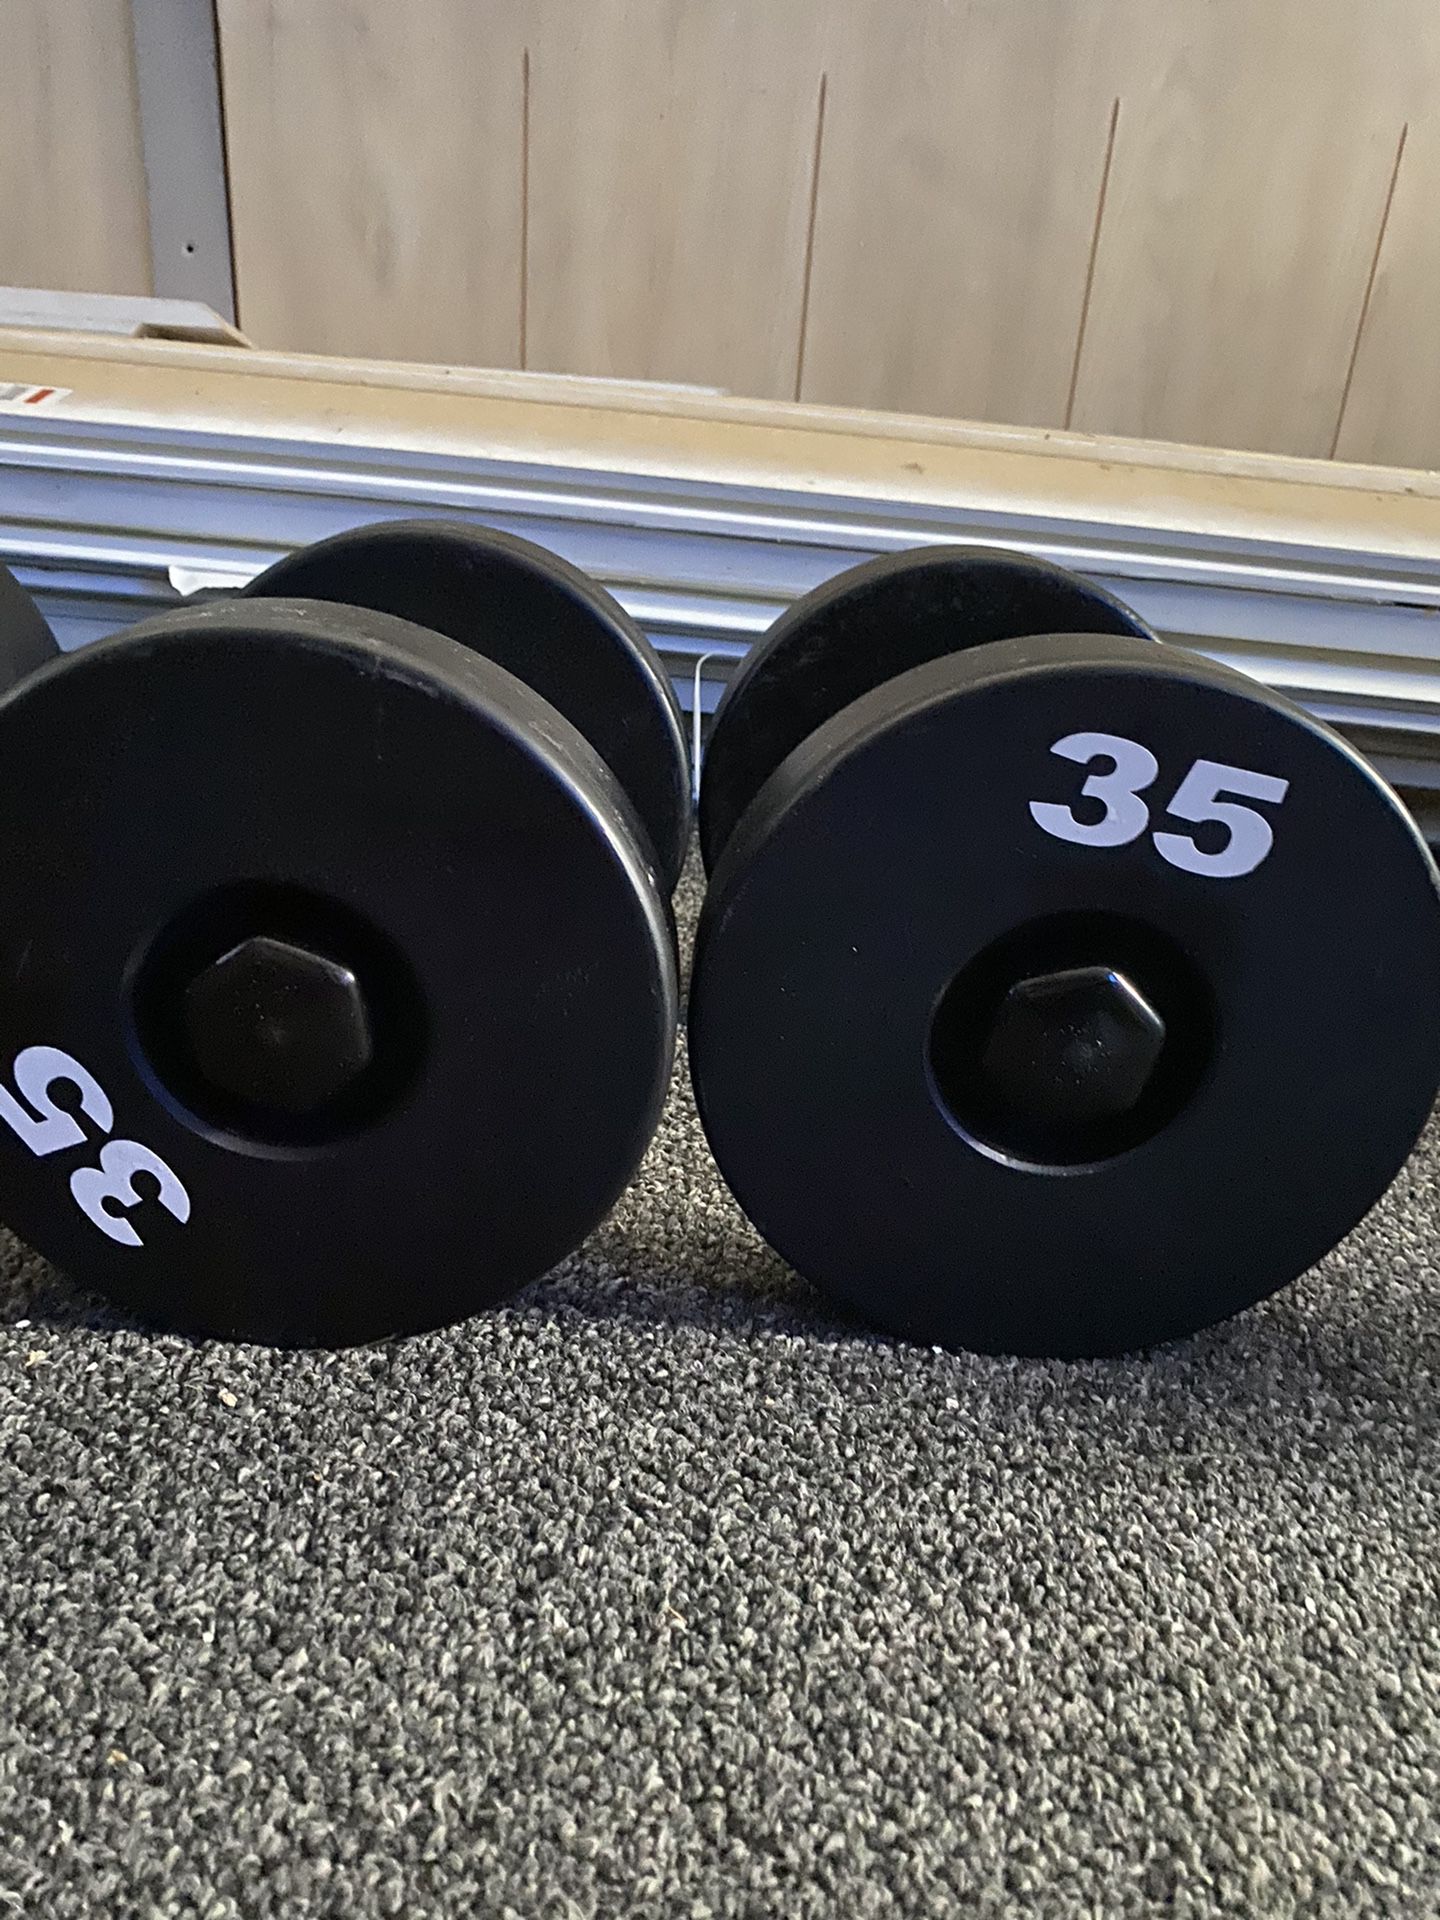 Commercial grade 35lb dumbbells/weights